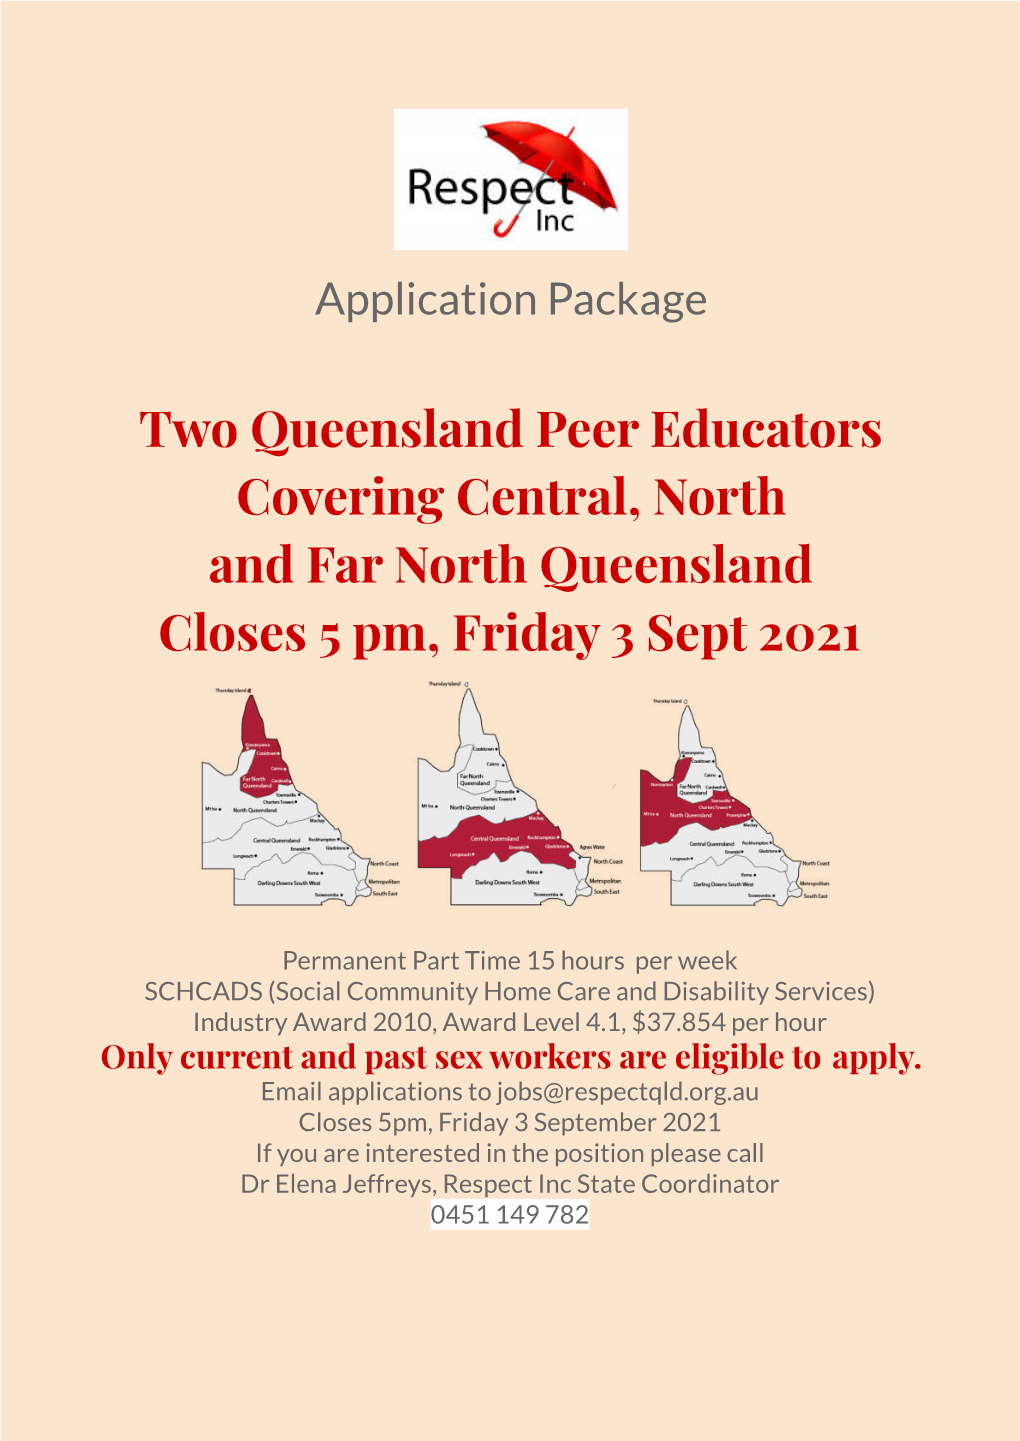 Nthqld Peer Educators Application Package Aug 2021